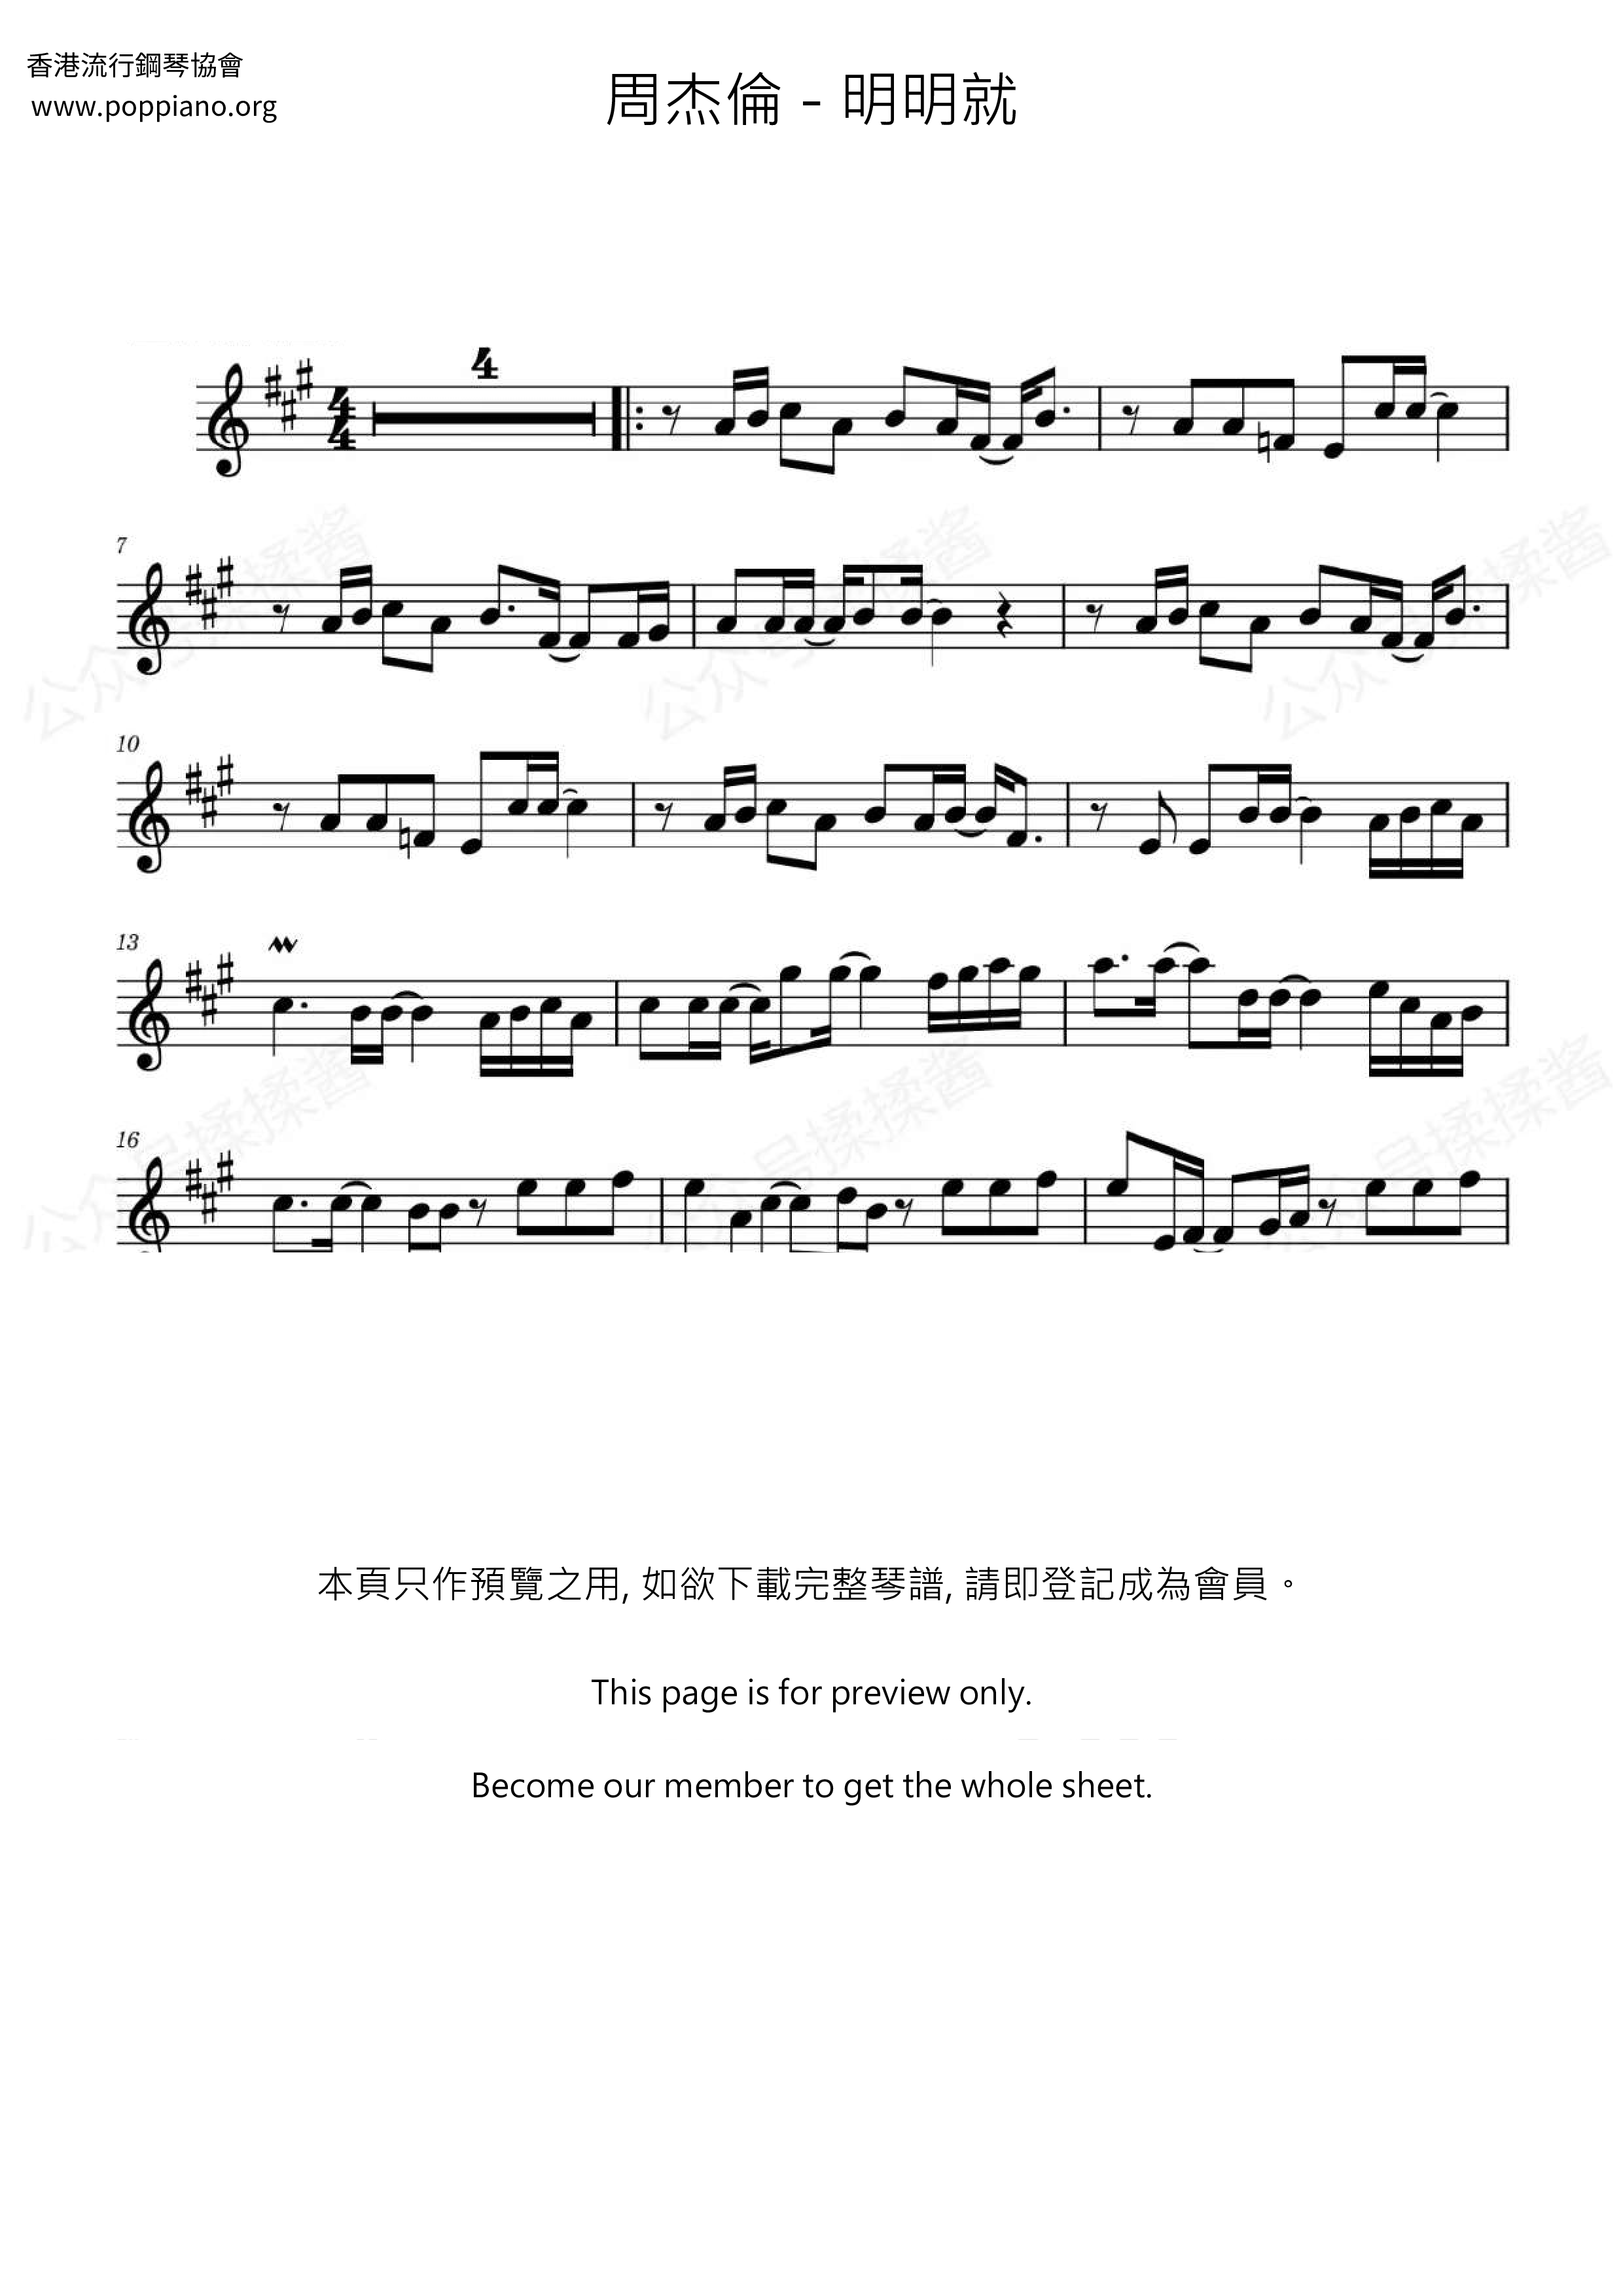 Ming Ming Ji Score